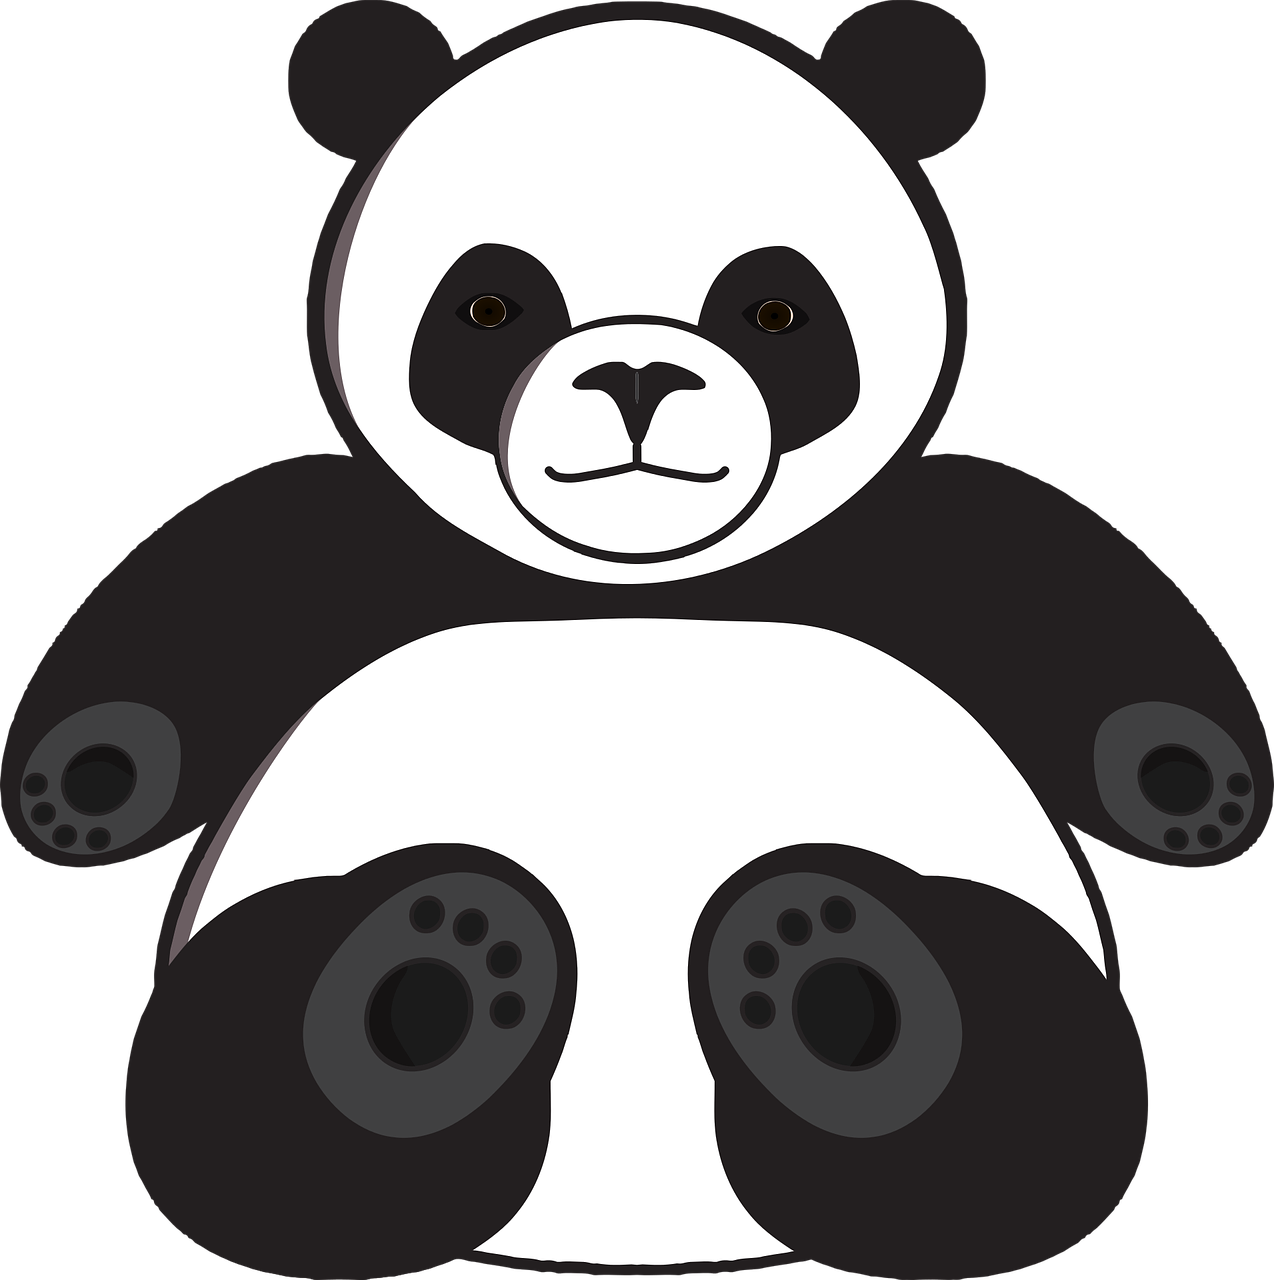 Panda, giant-panda, bear, free vector graphics, free illustrations ...